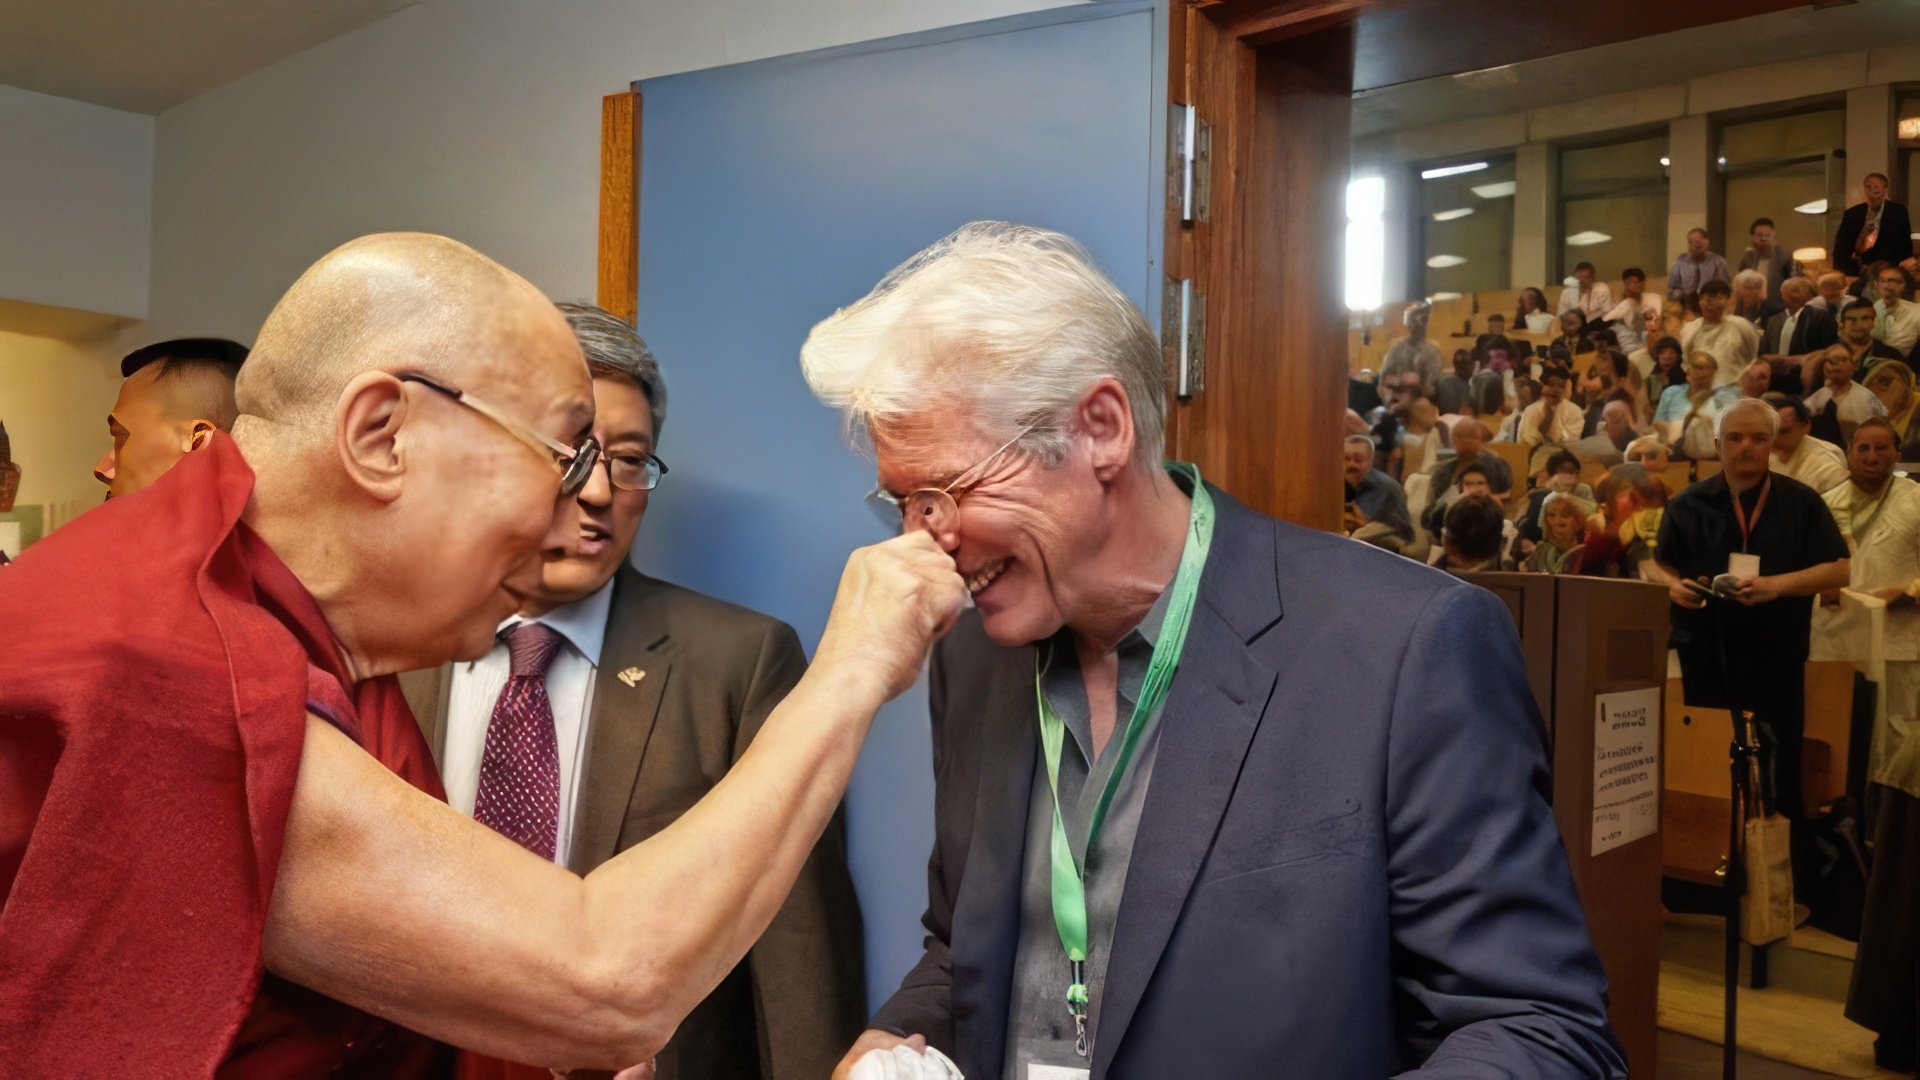 Richard Gere is familiar with the Dalai Lama